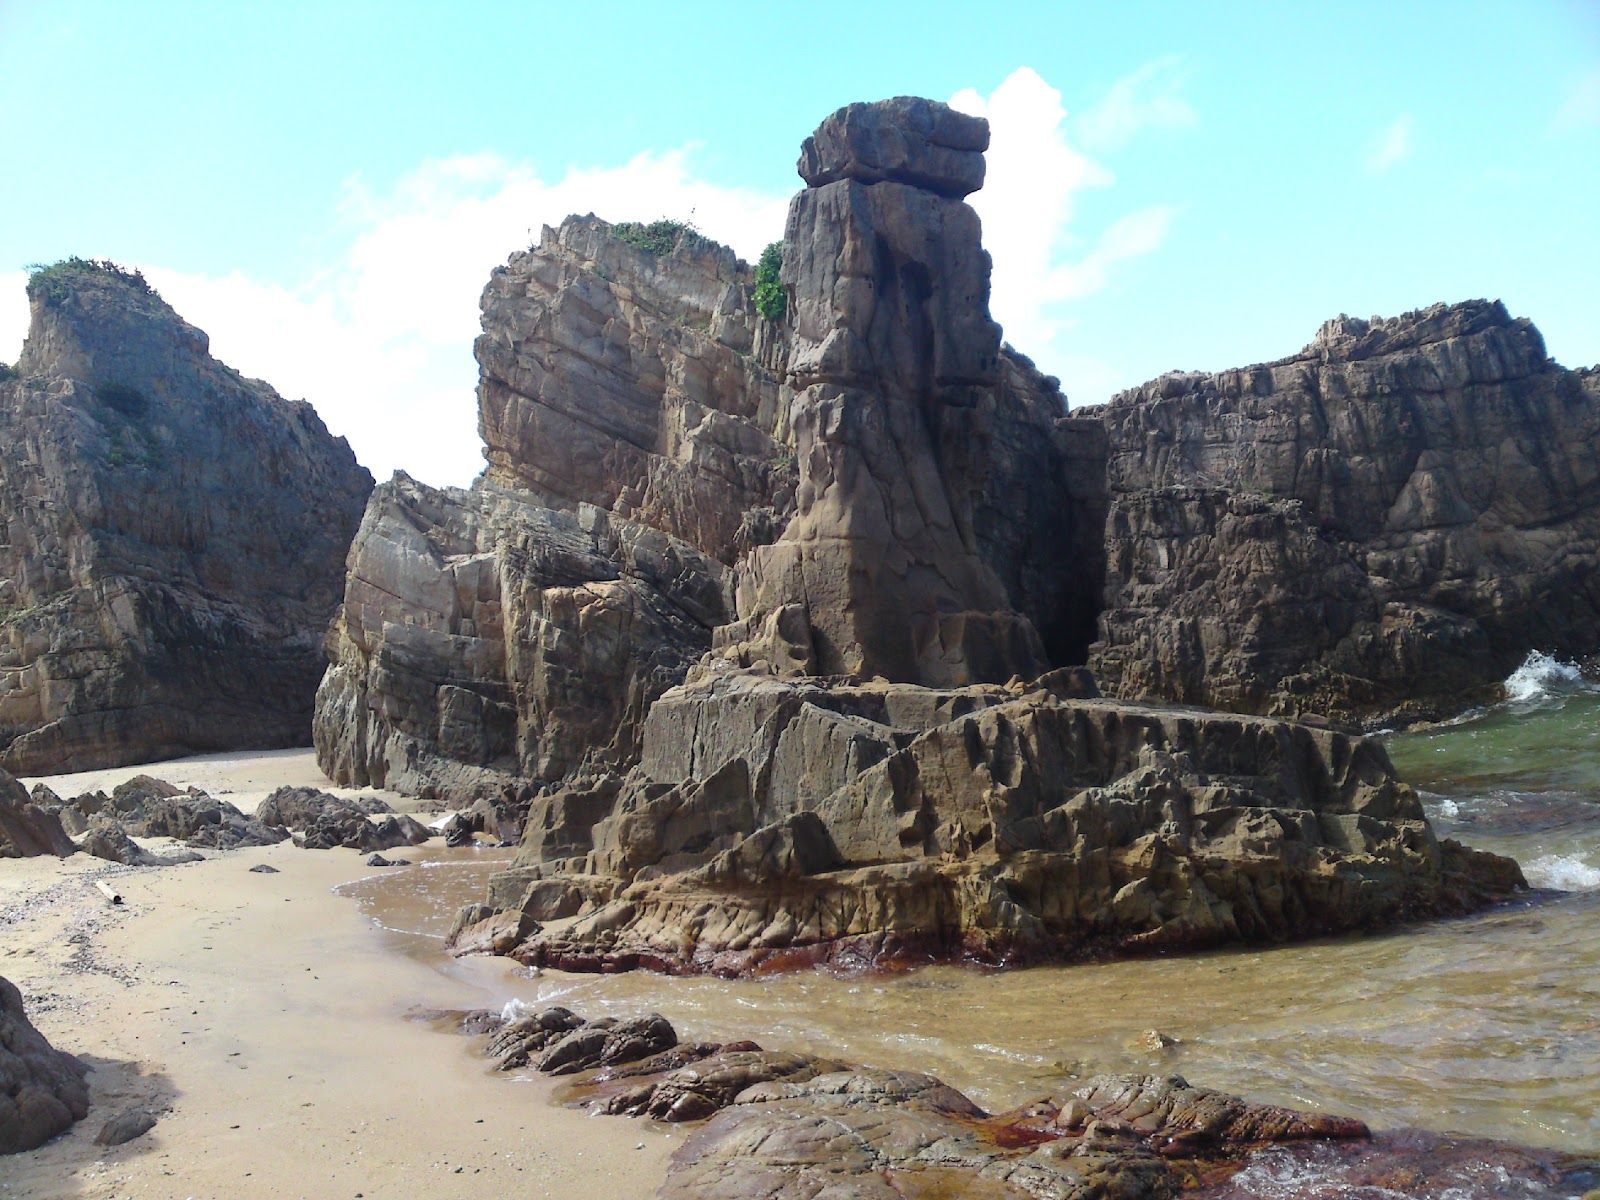 Da Nhay Beach - Quang Binh - A big rock in Da Nhay beach with strange shape